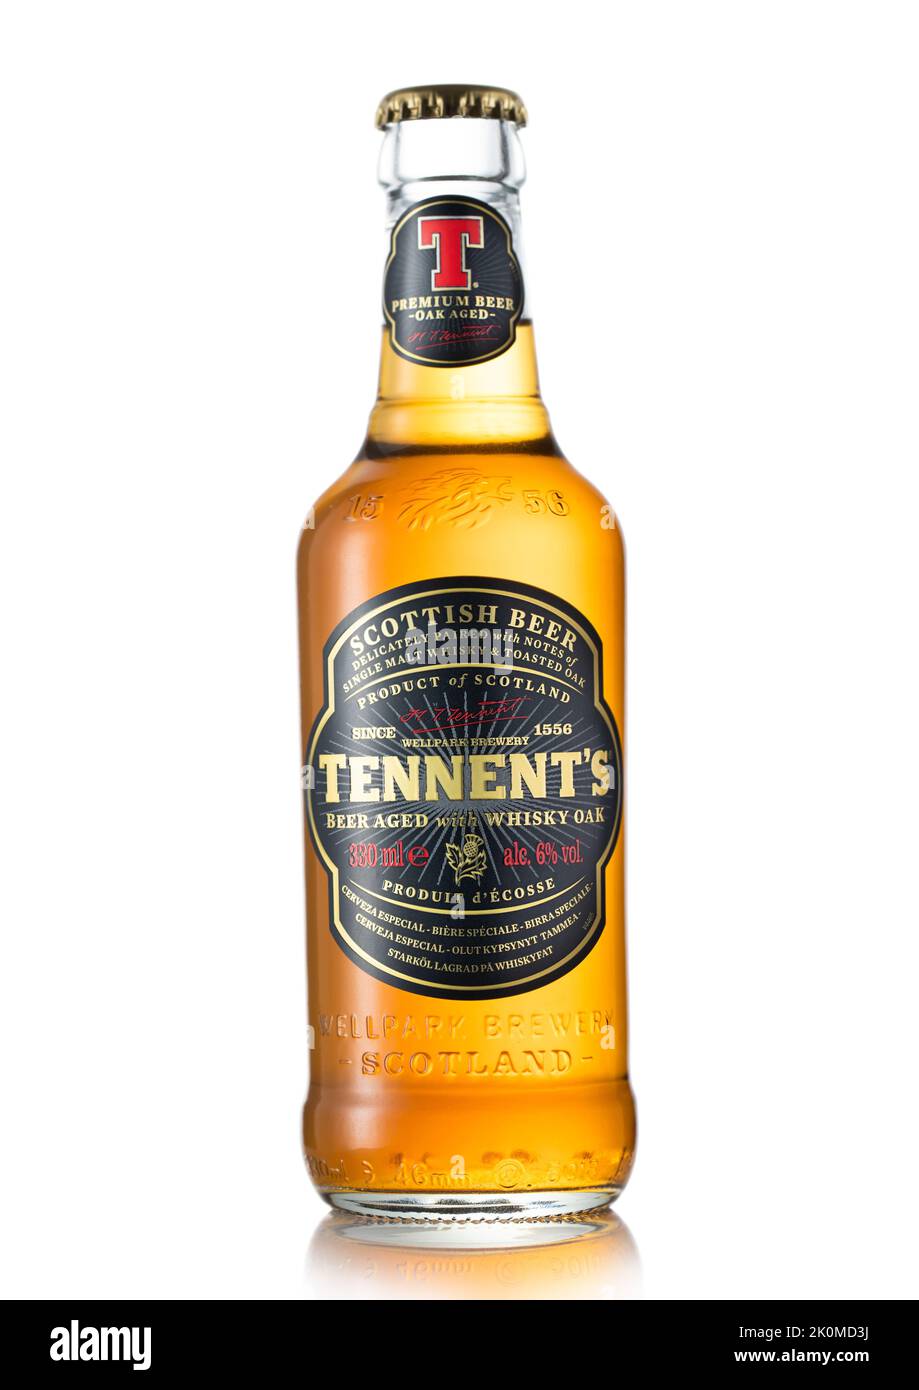 LONDON, UK - JULY 01, 2022: Bottle Tennent's beer aged whisky oak on white. Stock Photo